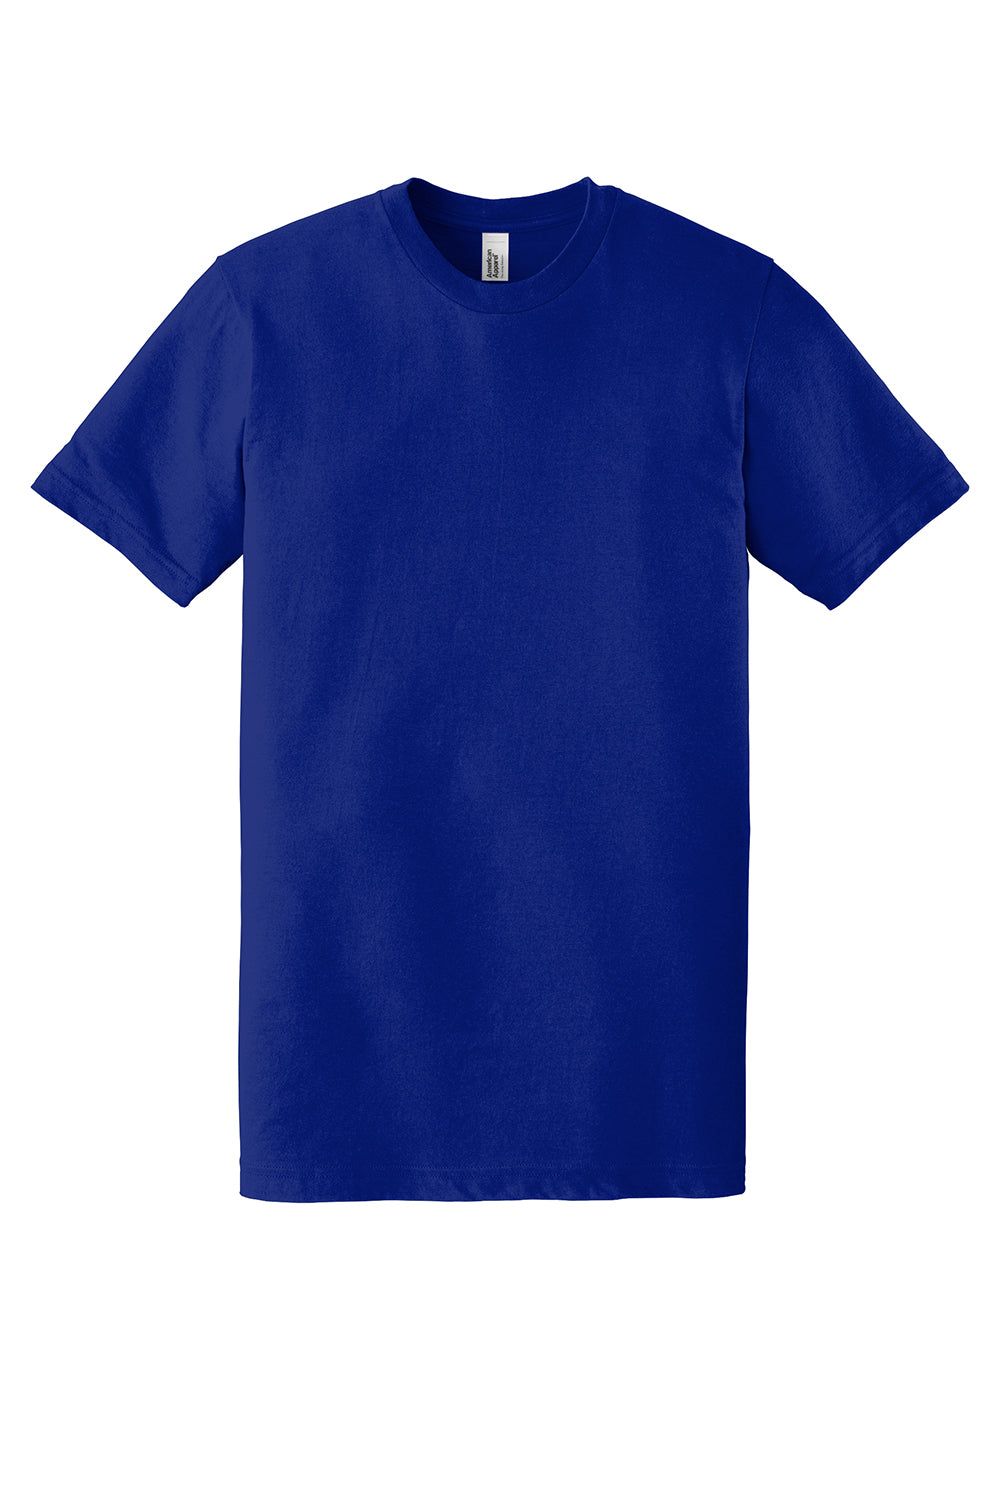 American Apparel 2001 Mens Fine Jersey Short Sleeve Crewneck T-Shirt Lapis Blue Flat Front